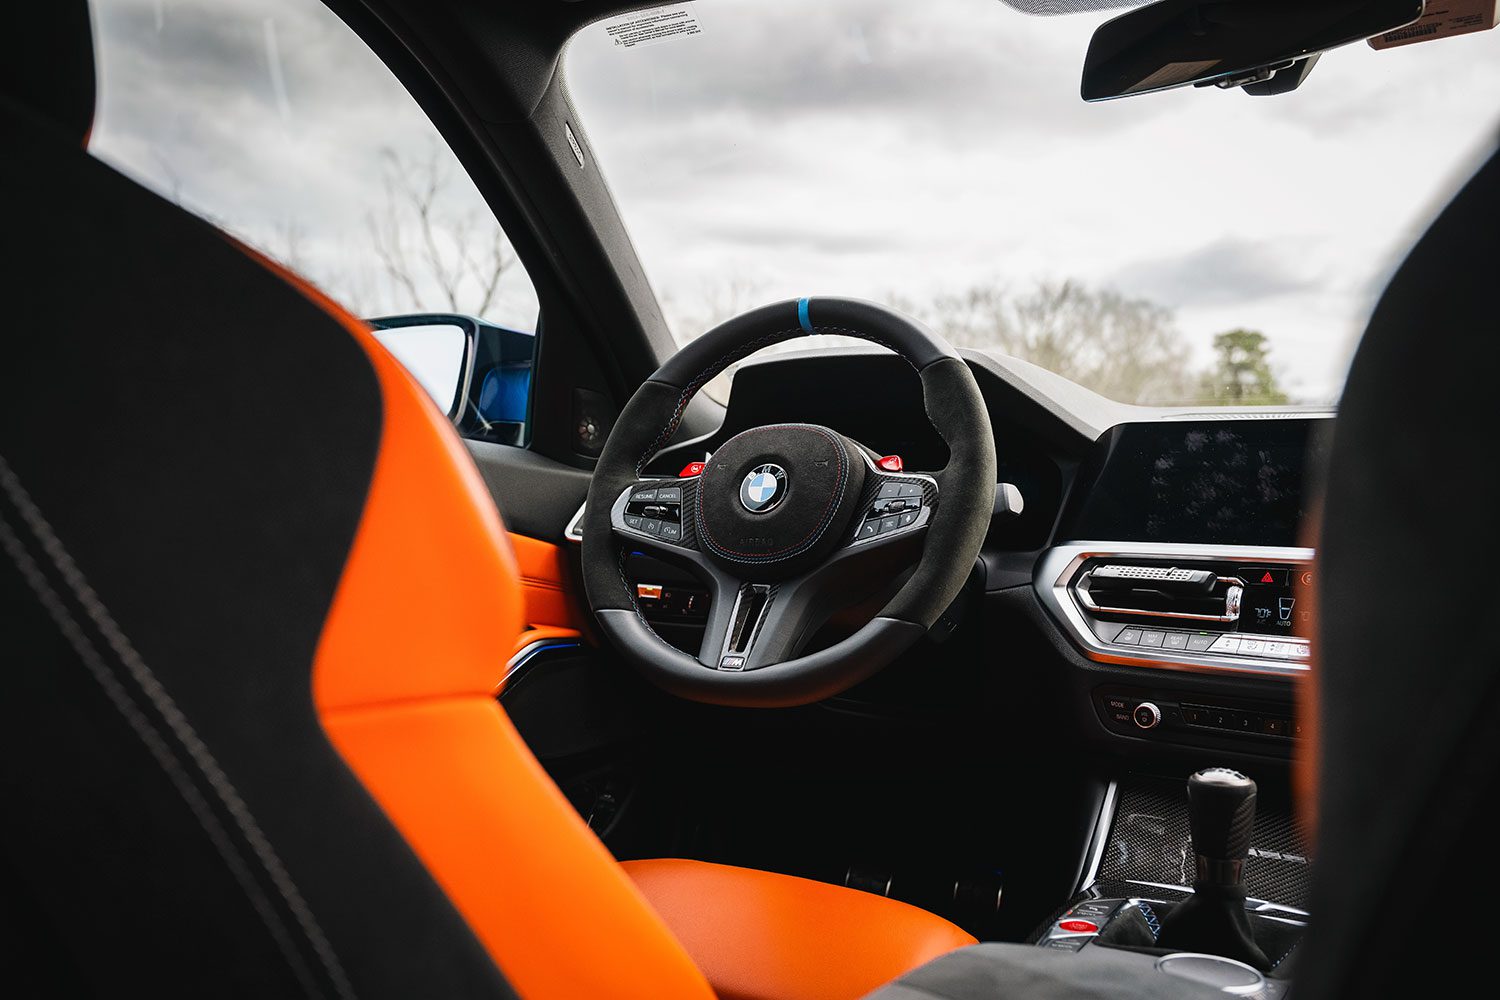 BMW M3 steering wheel install